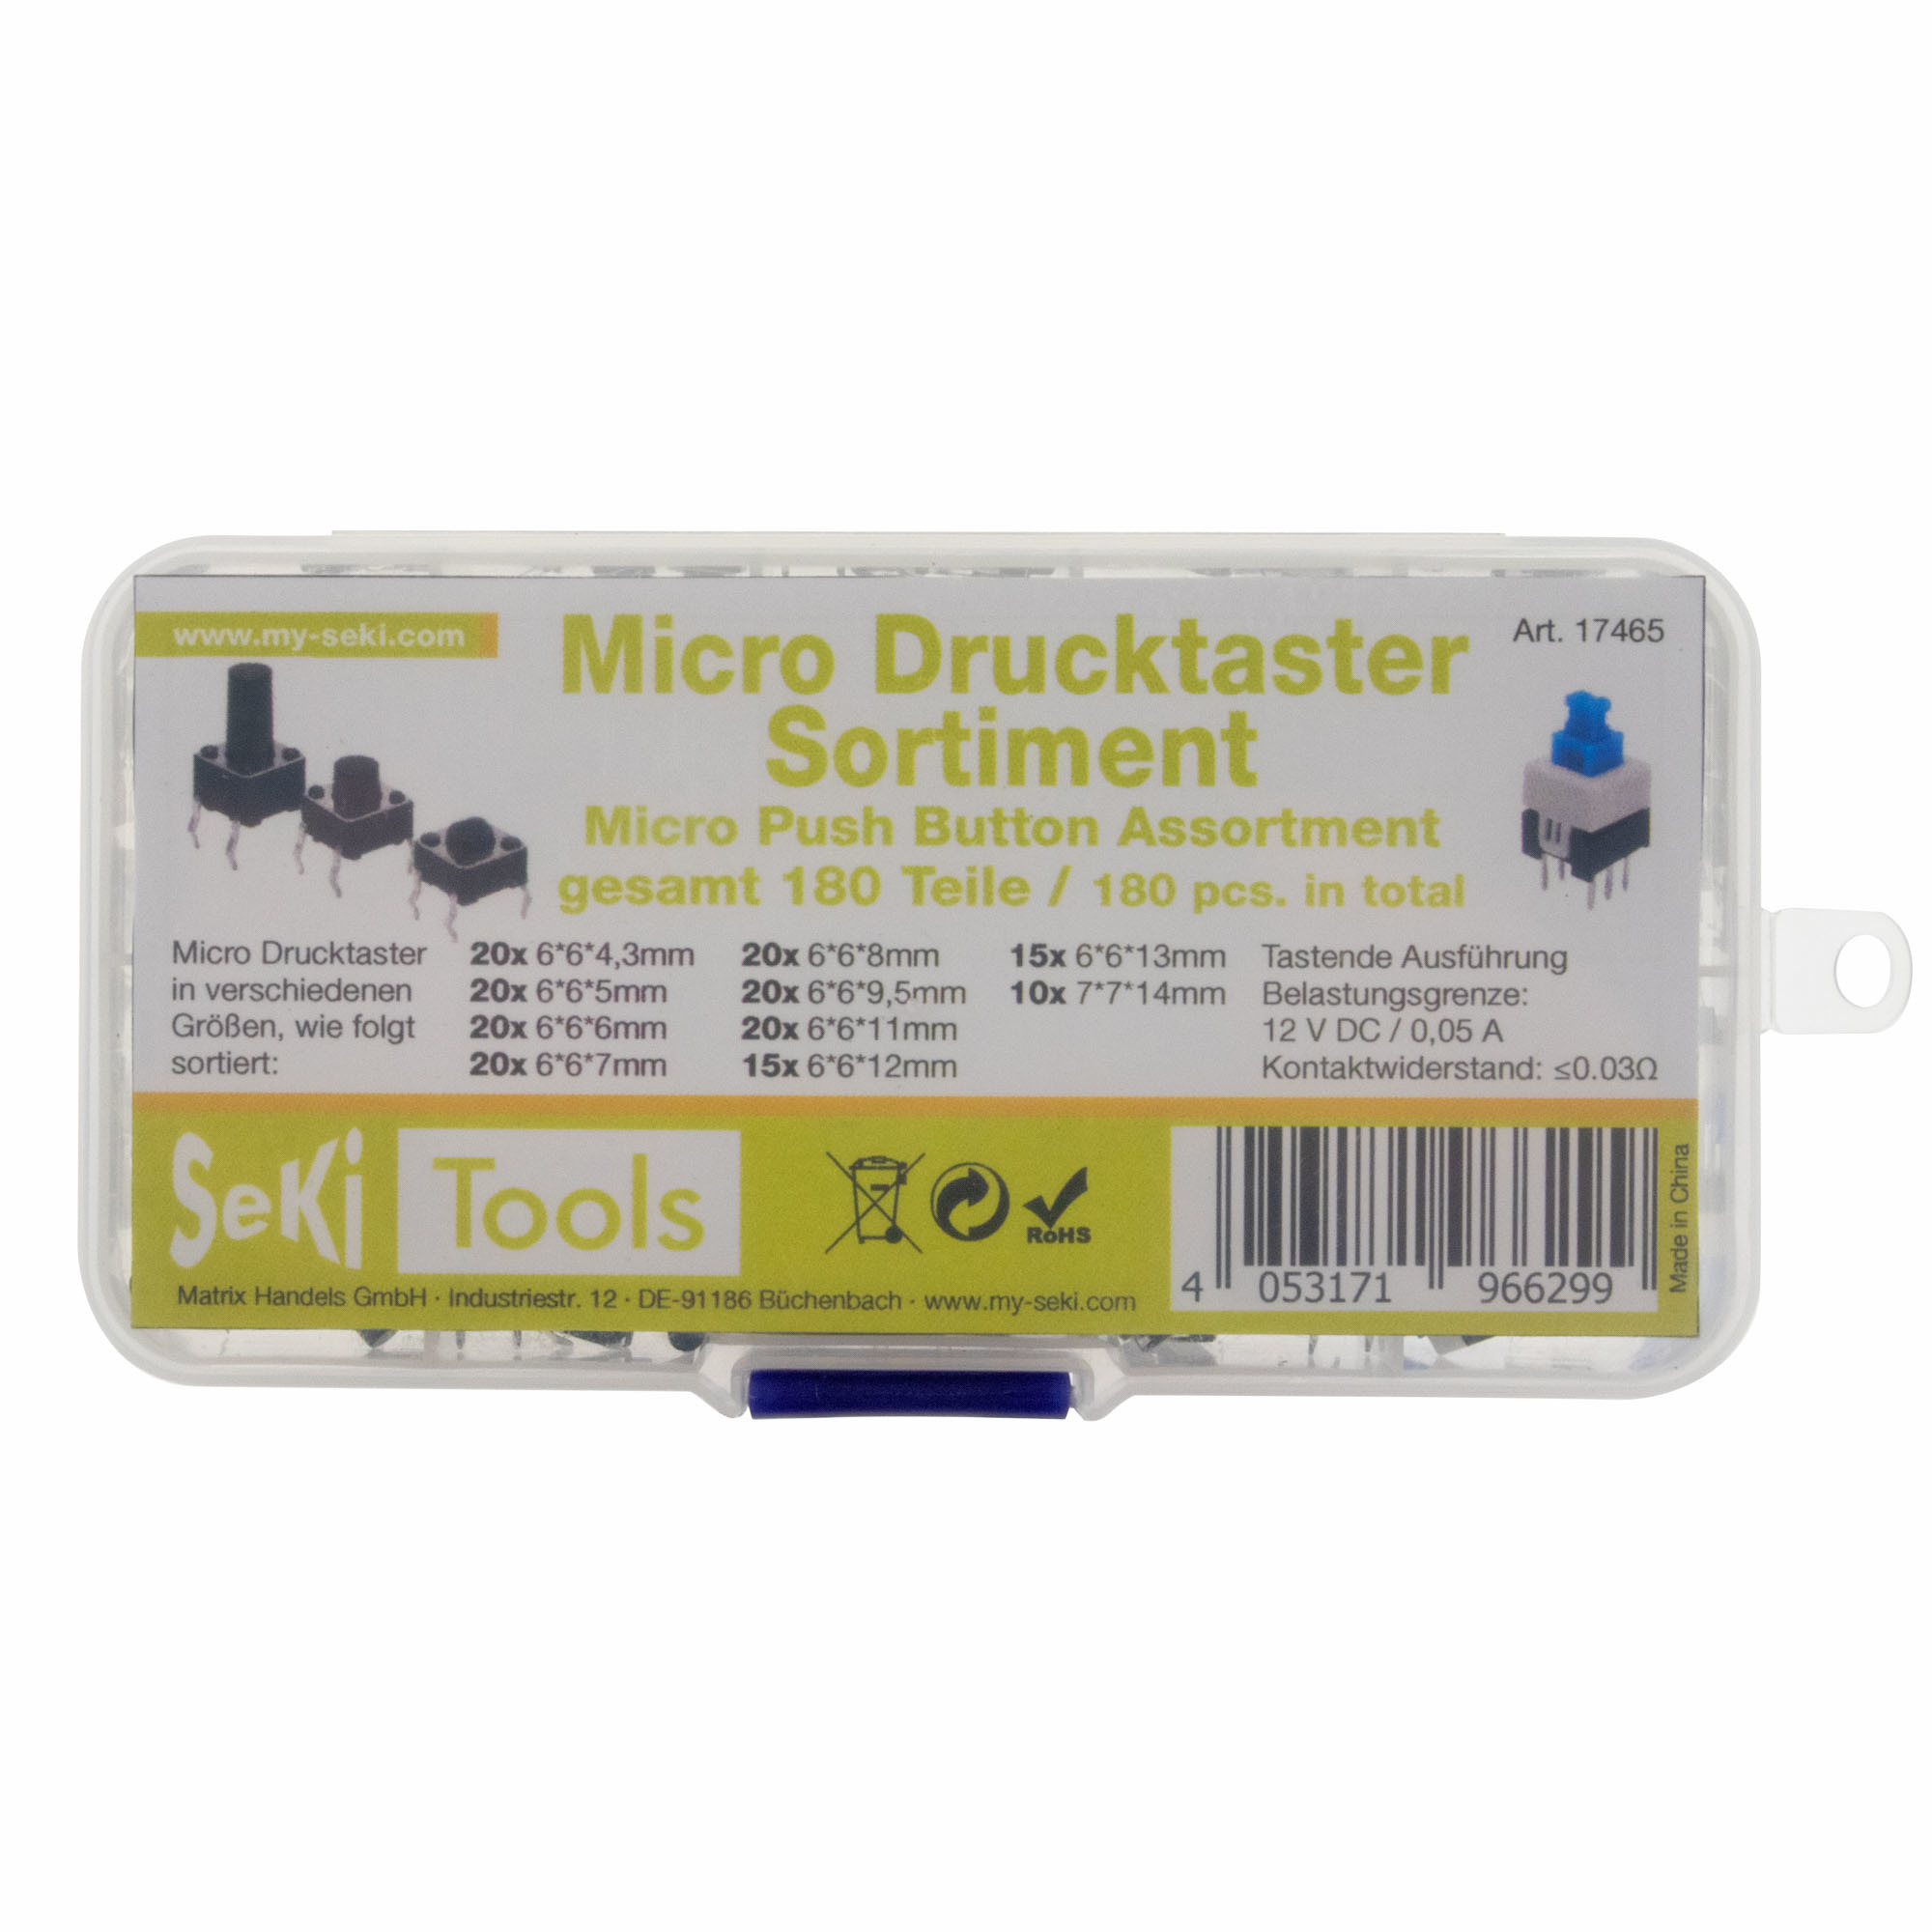 Micro Drucktaster Sortiment 180 Teile